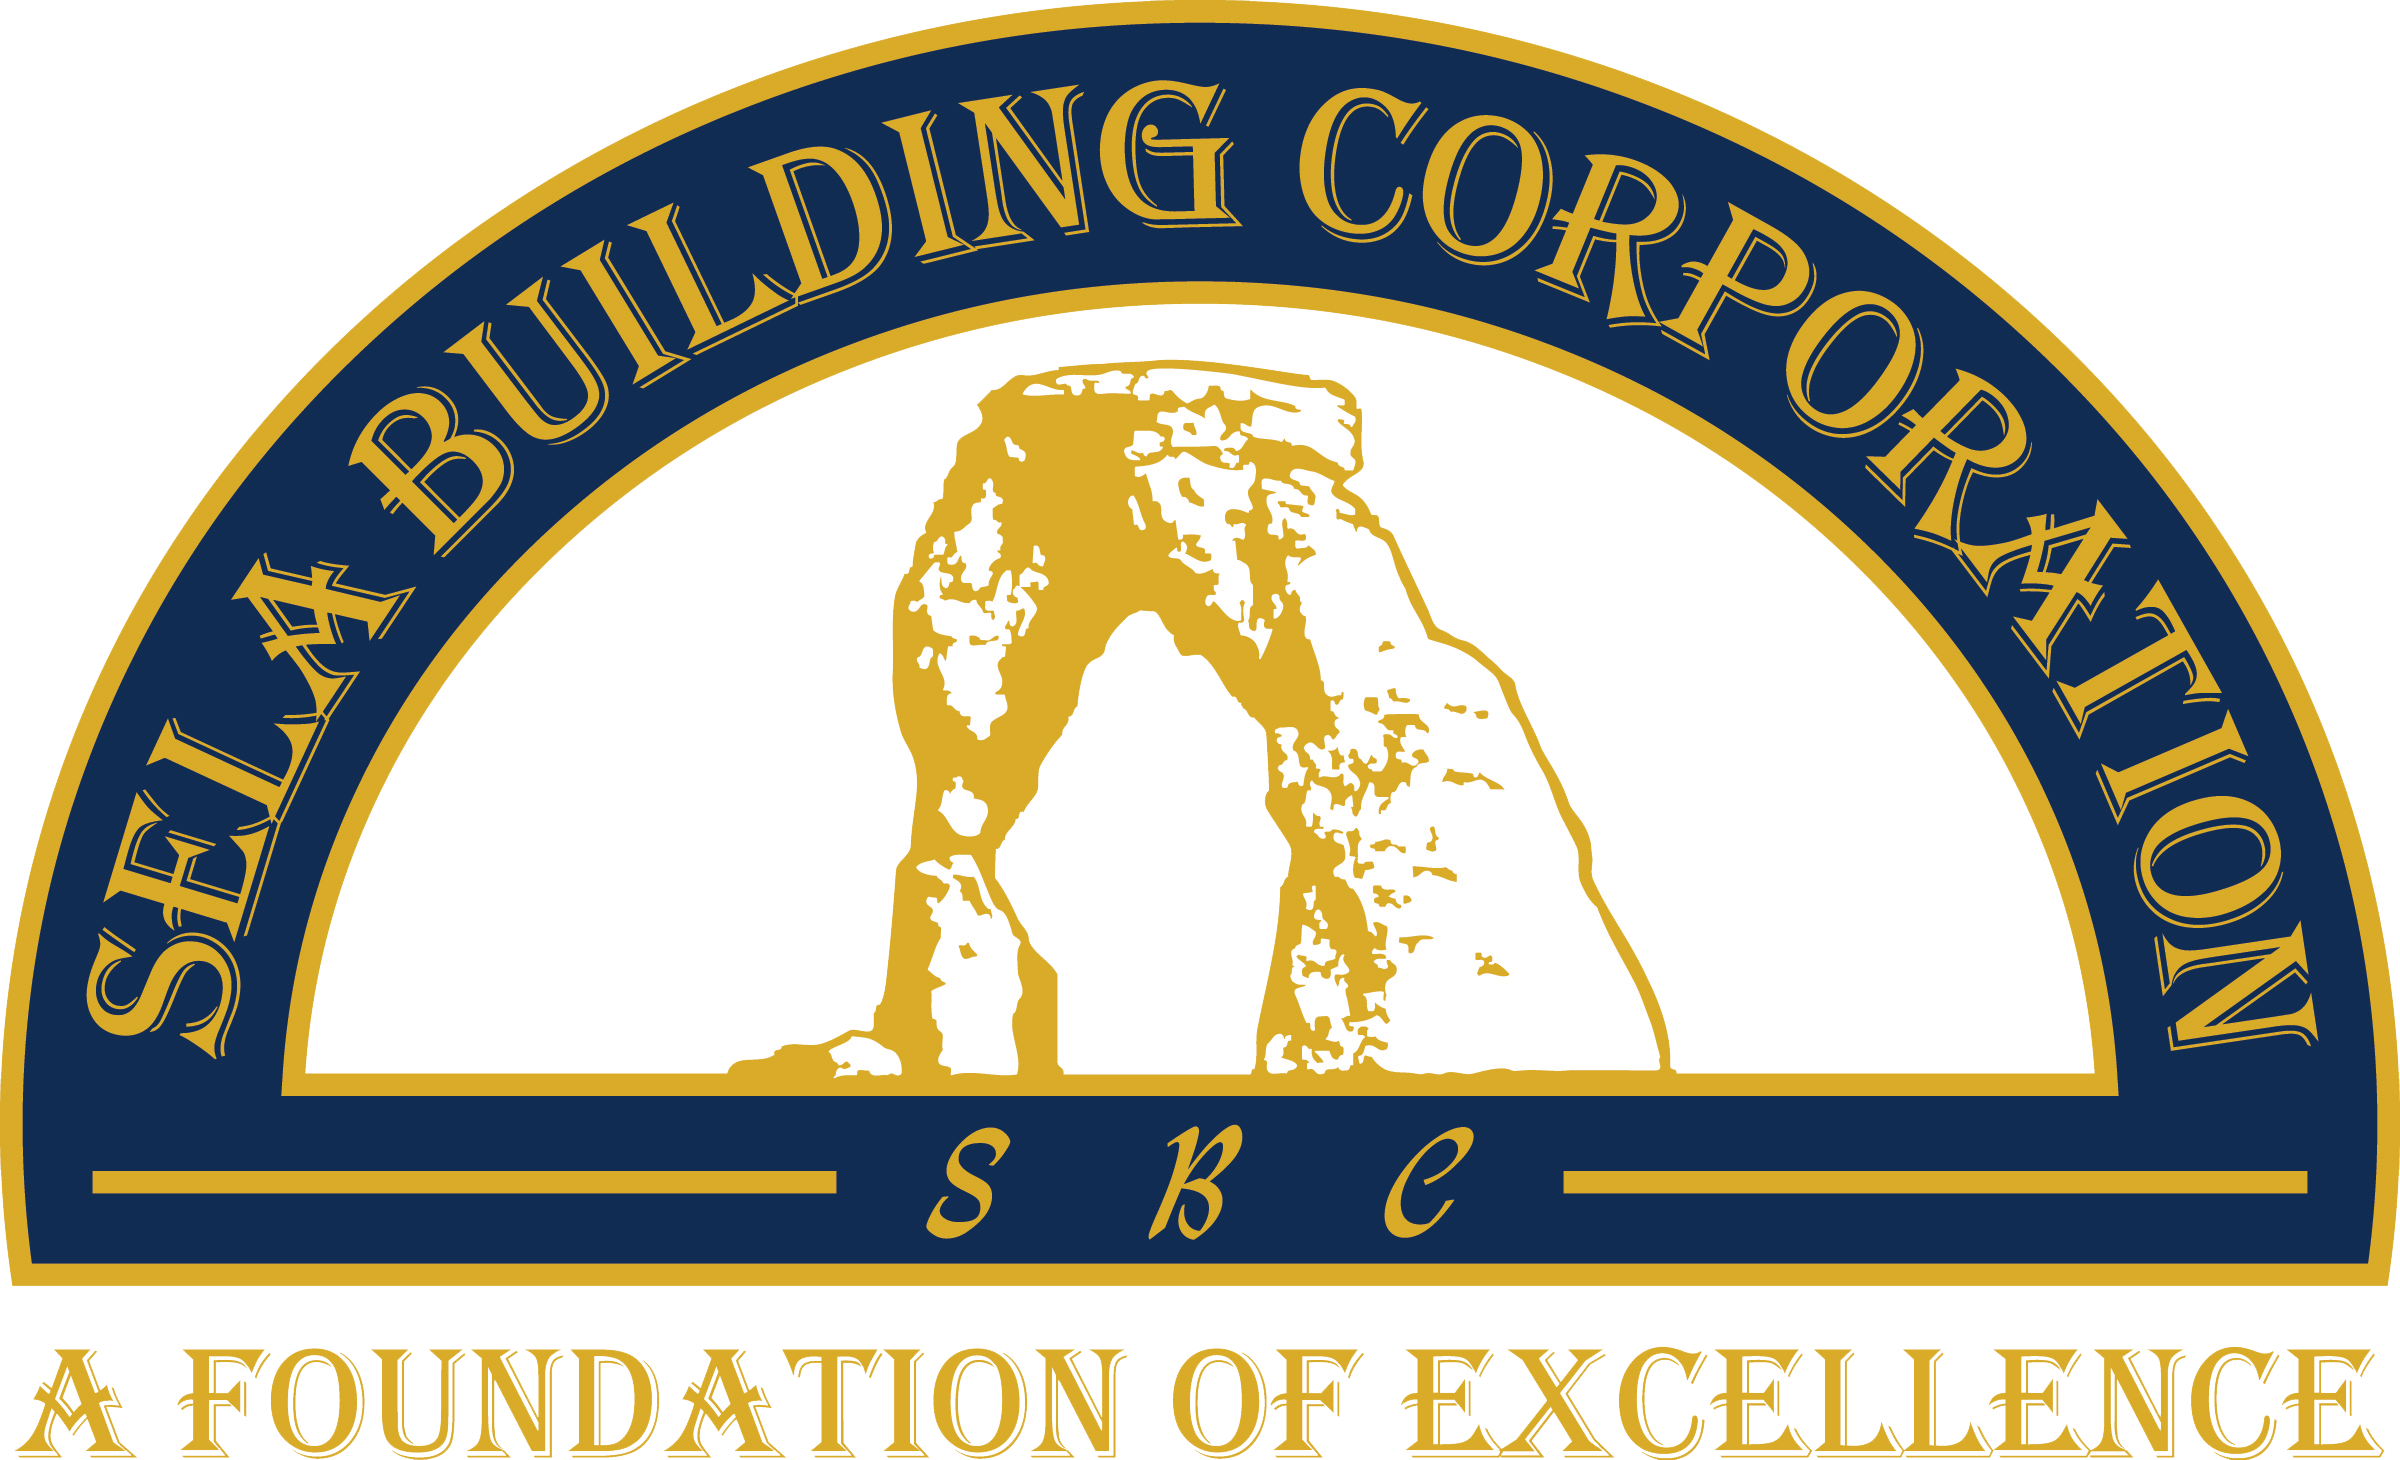 Sela Building Corporation